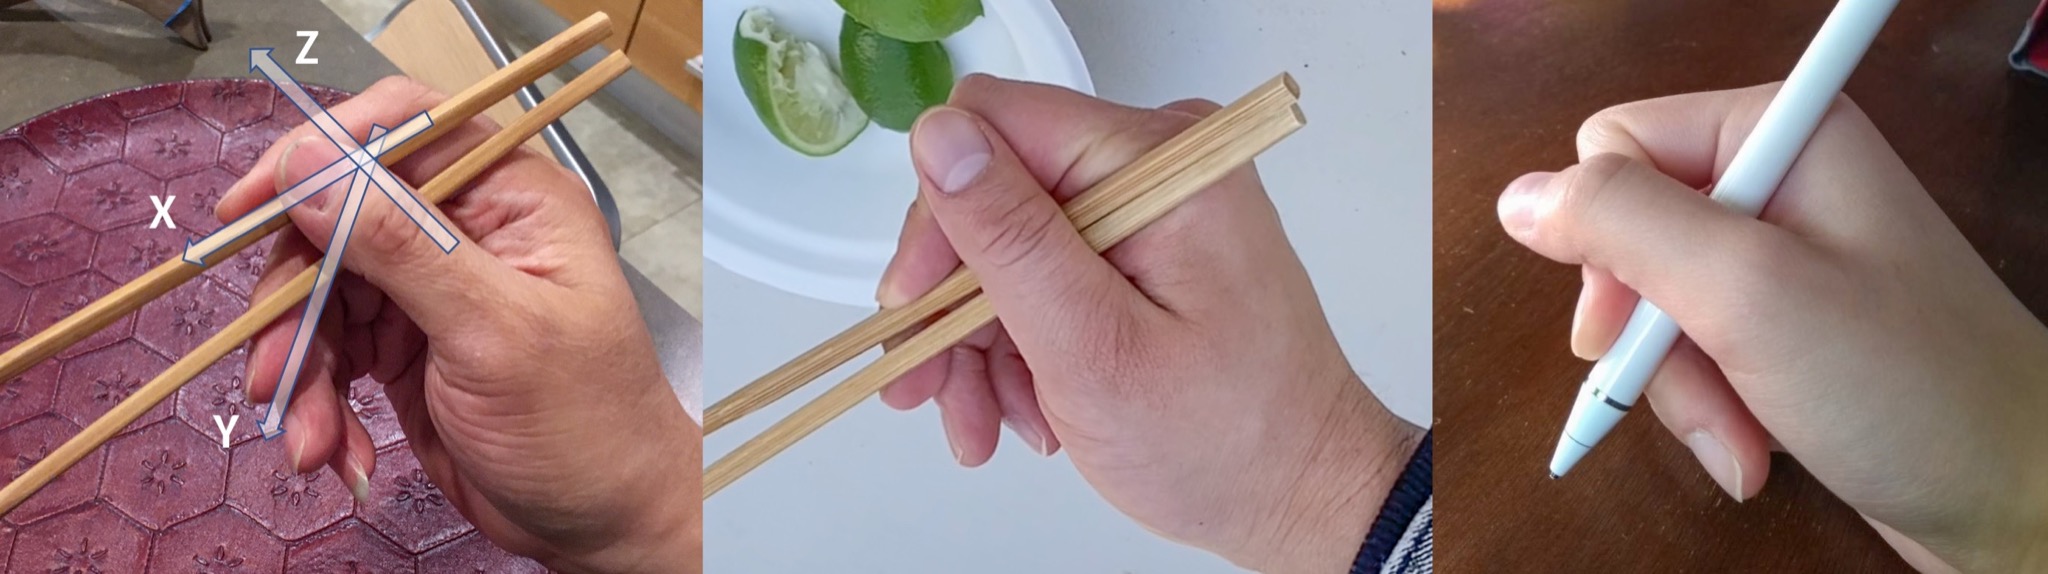 Chopstick Grips of TWICE Members - Marcosticks